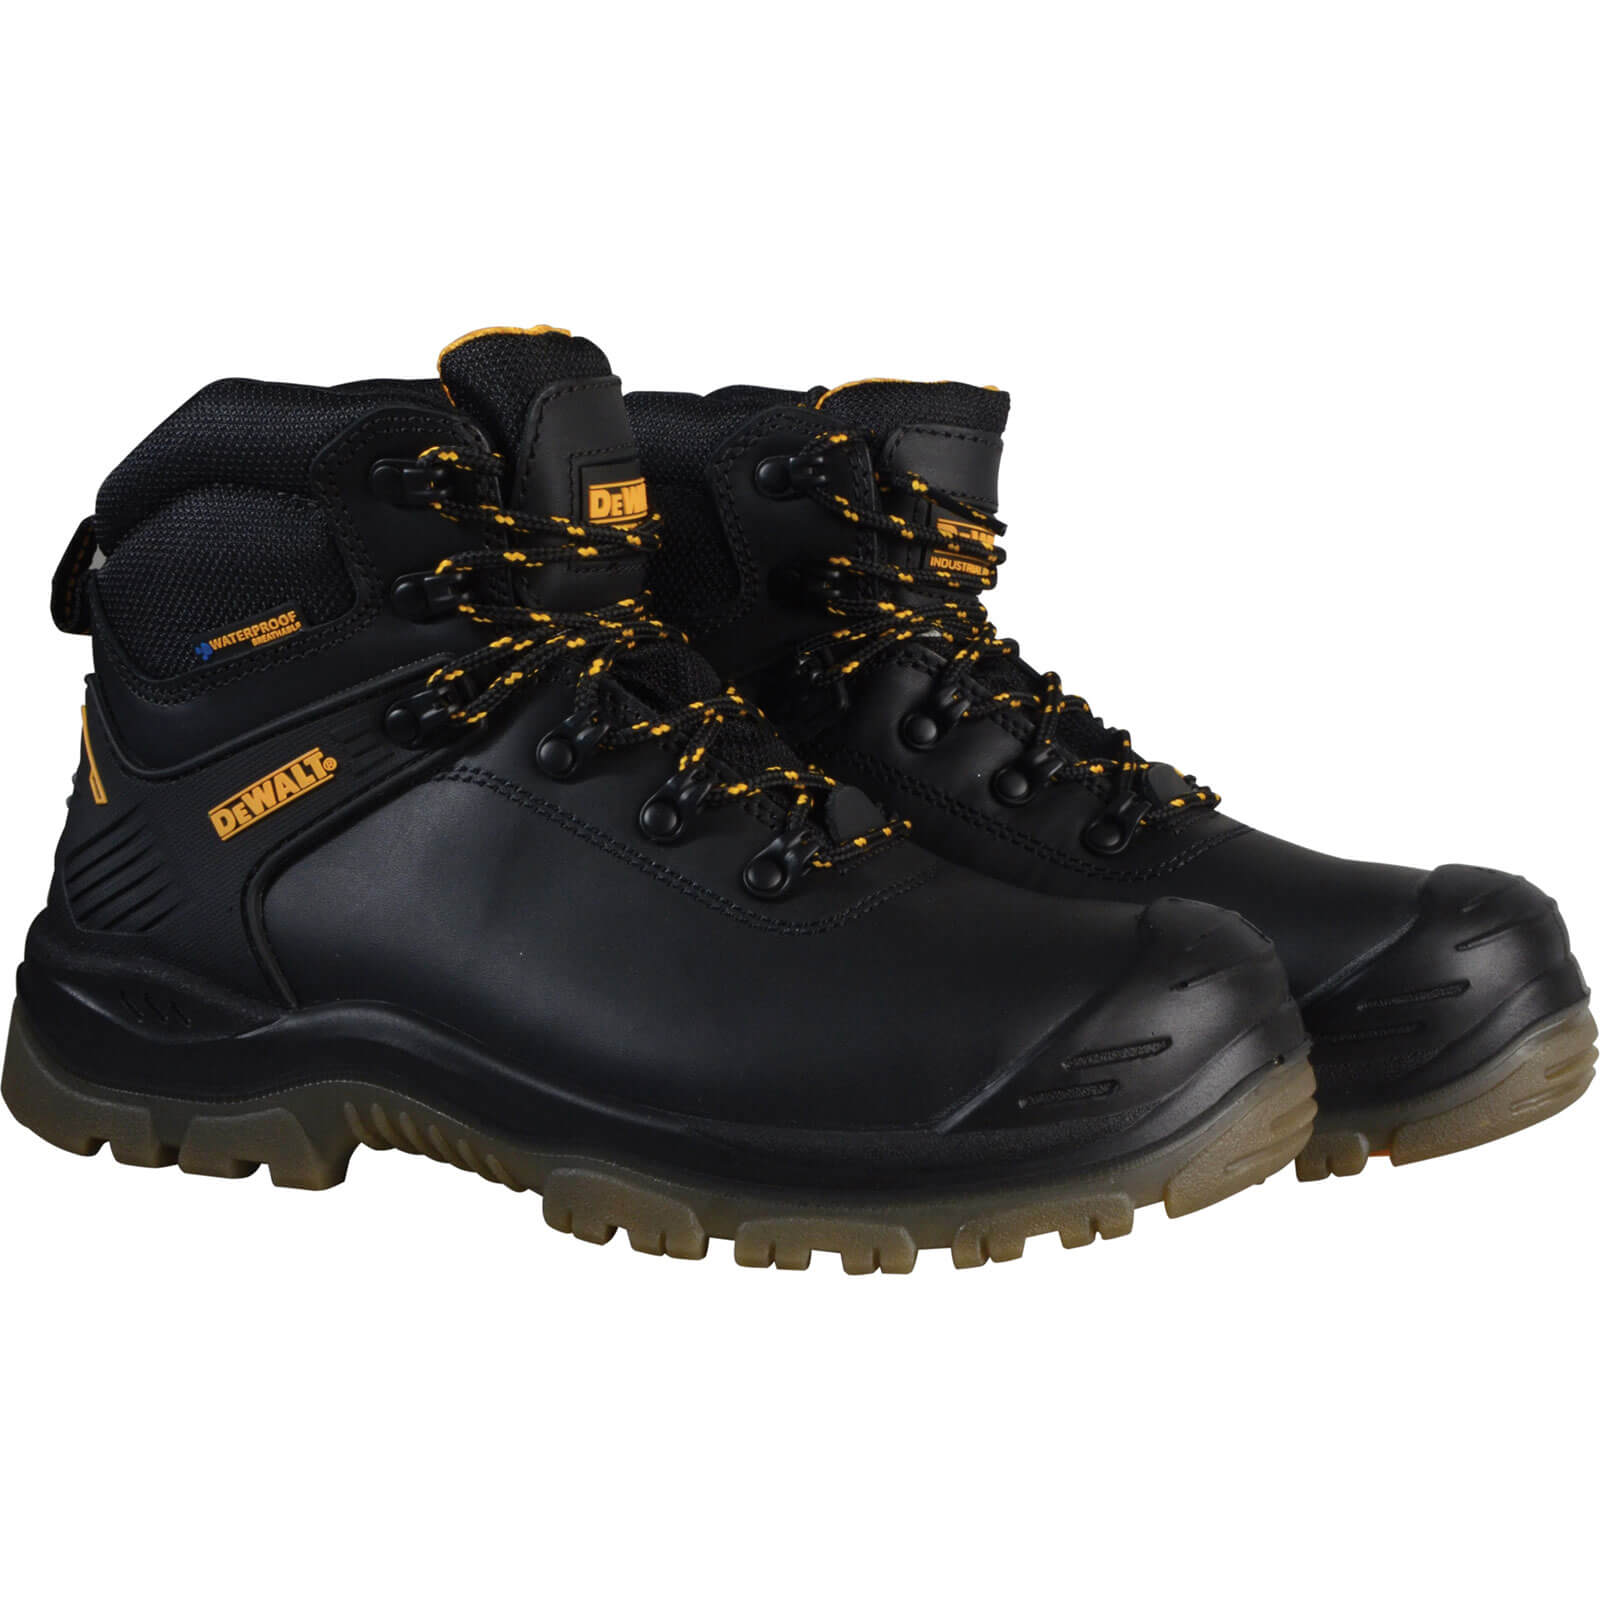 DeWalt Newark Waterproof Safety Hiker Boots Black Size 8